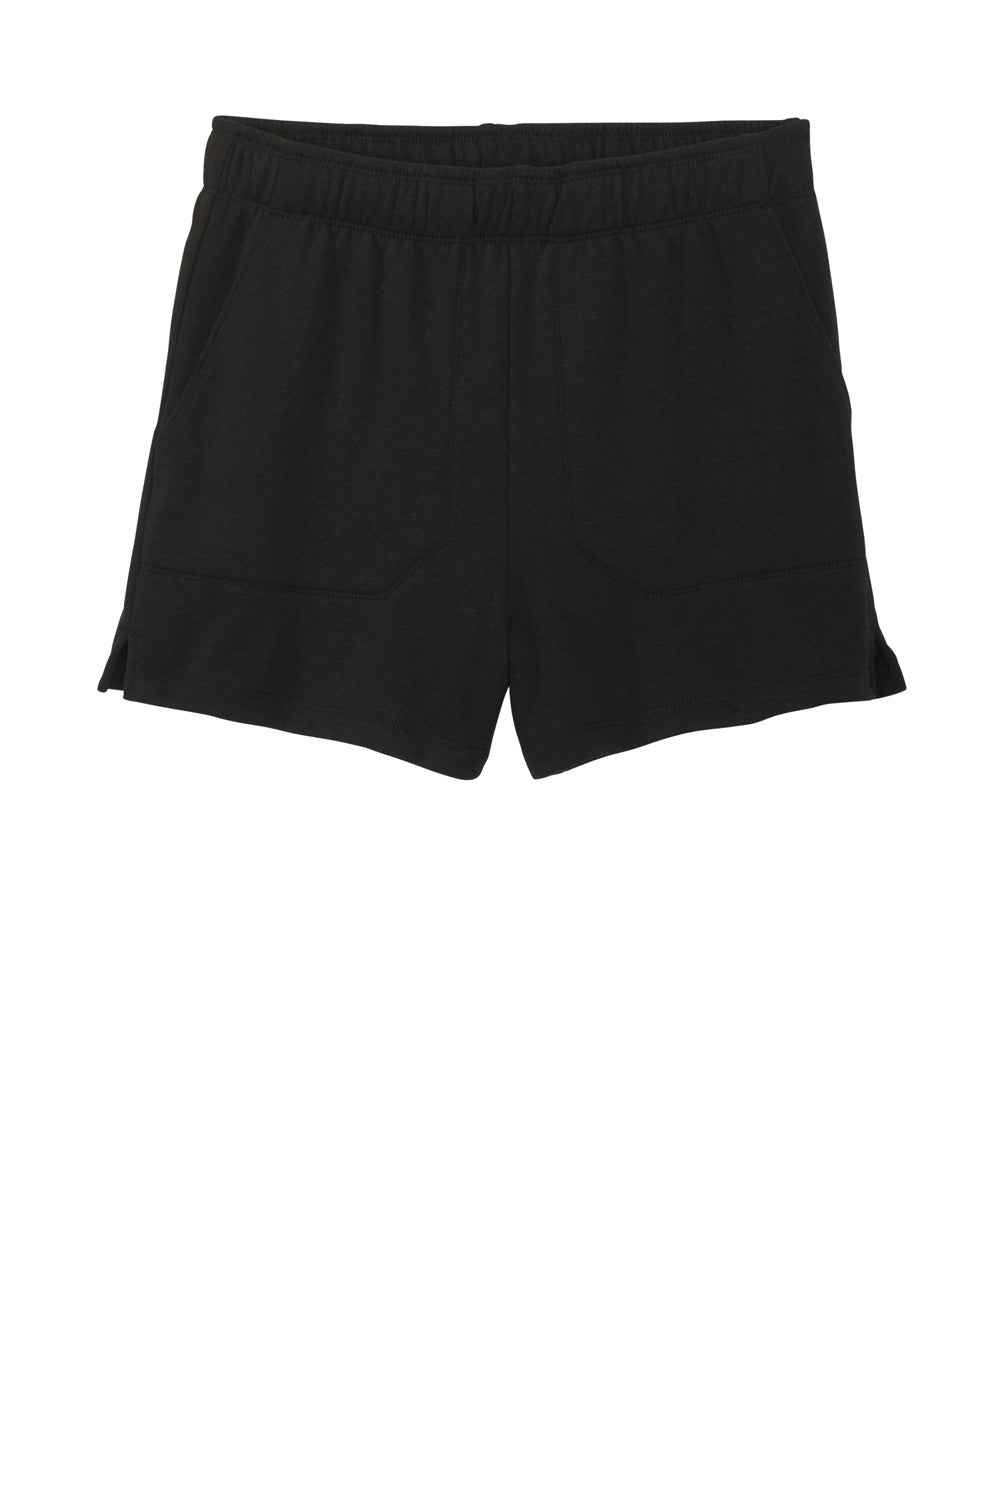 District DT1309 Womens Perfect Tri Fleece Shorts w/ Pockets Black Flat Front